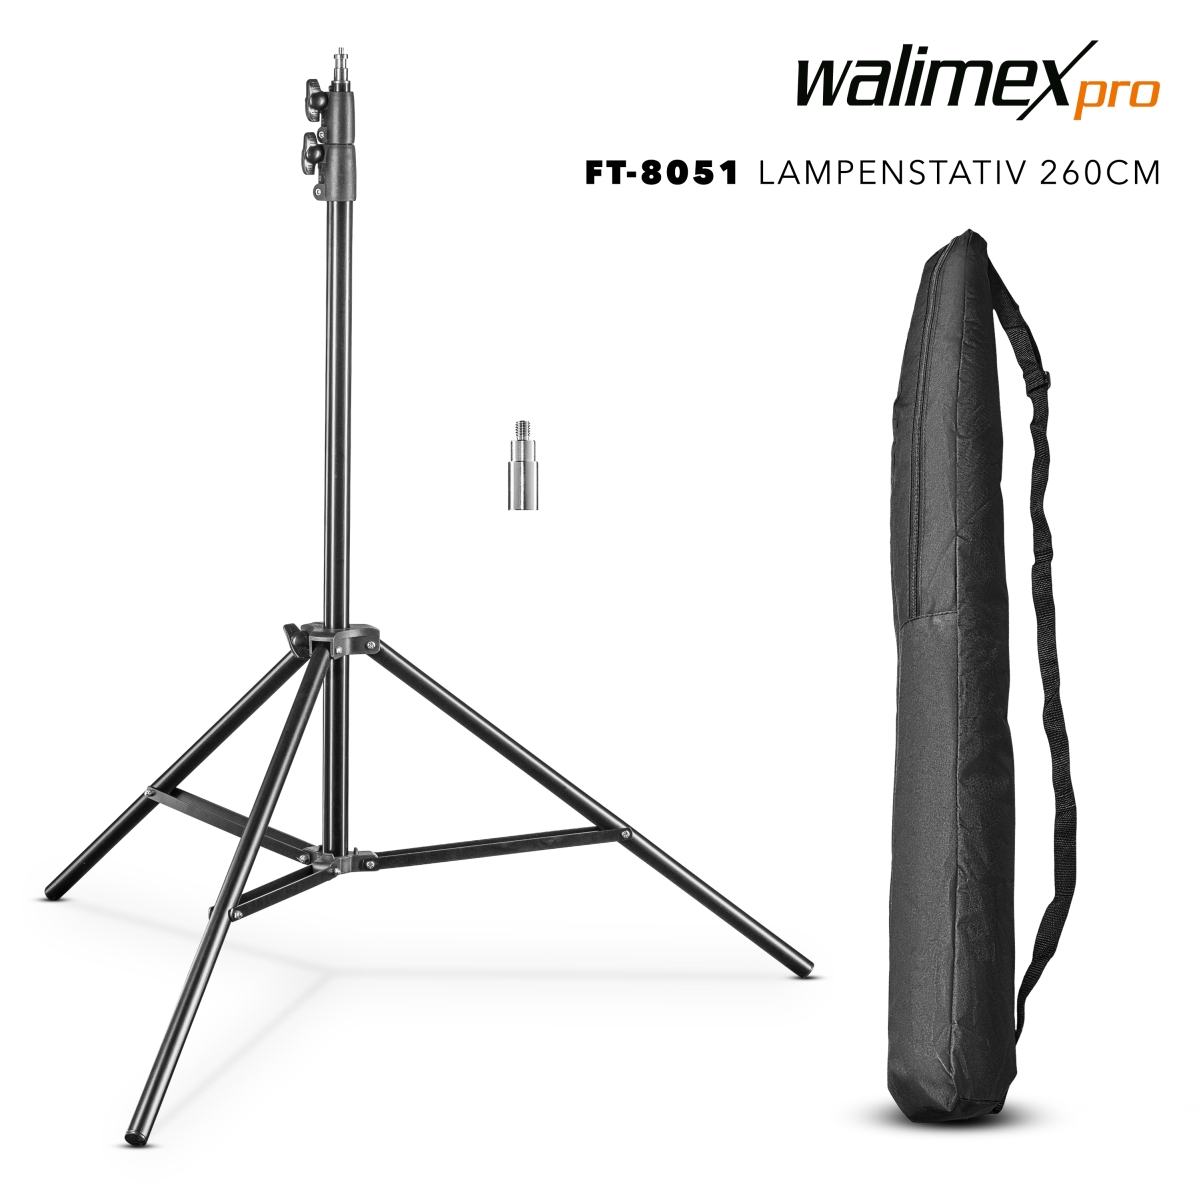 Walimex pro Daylight 250S Impression XL